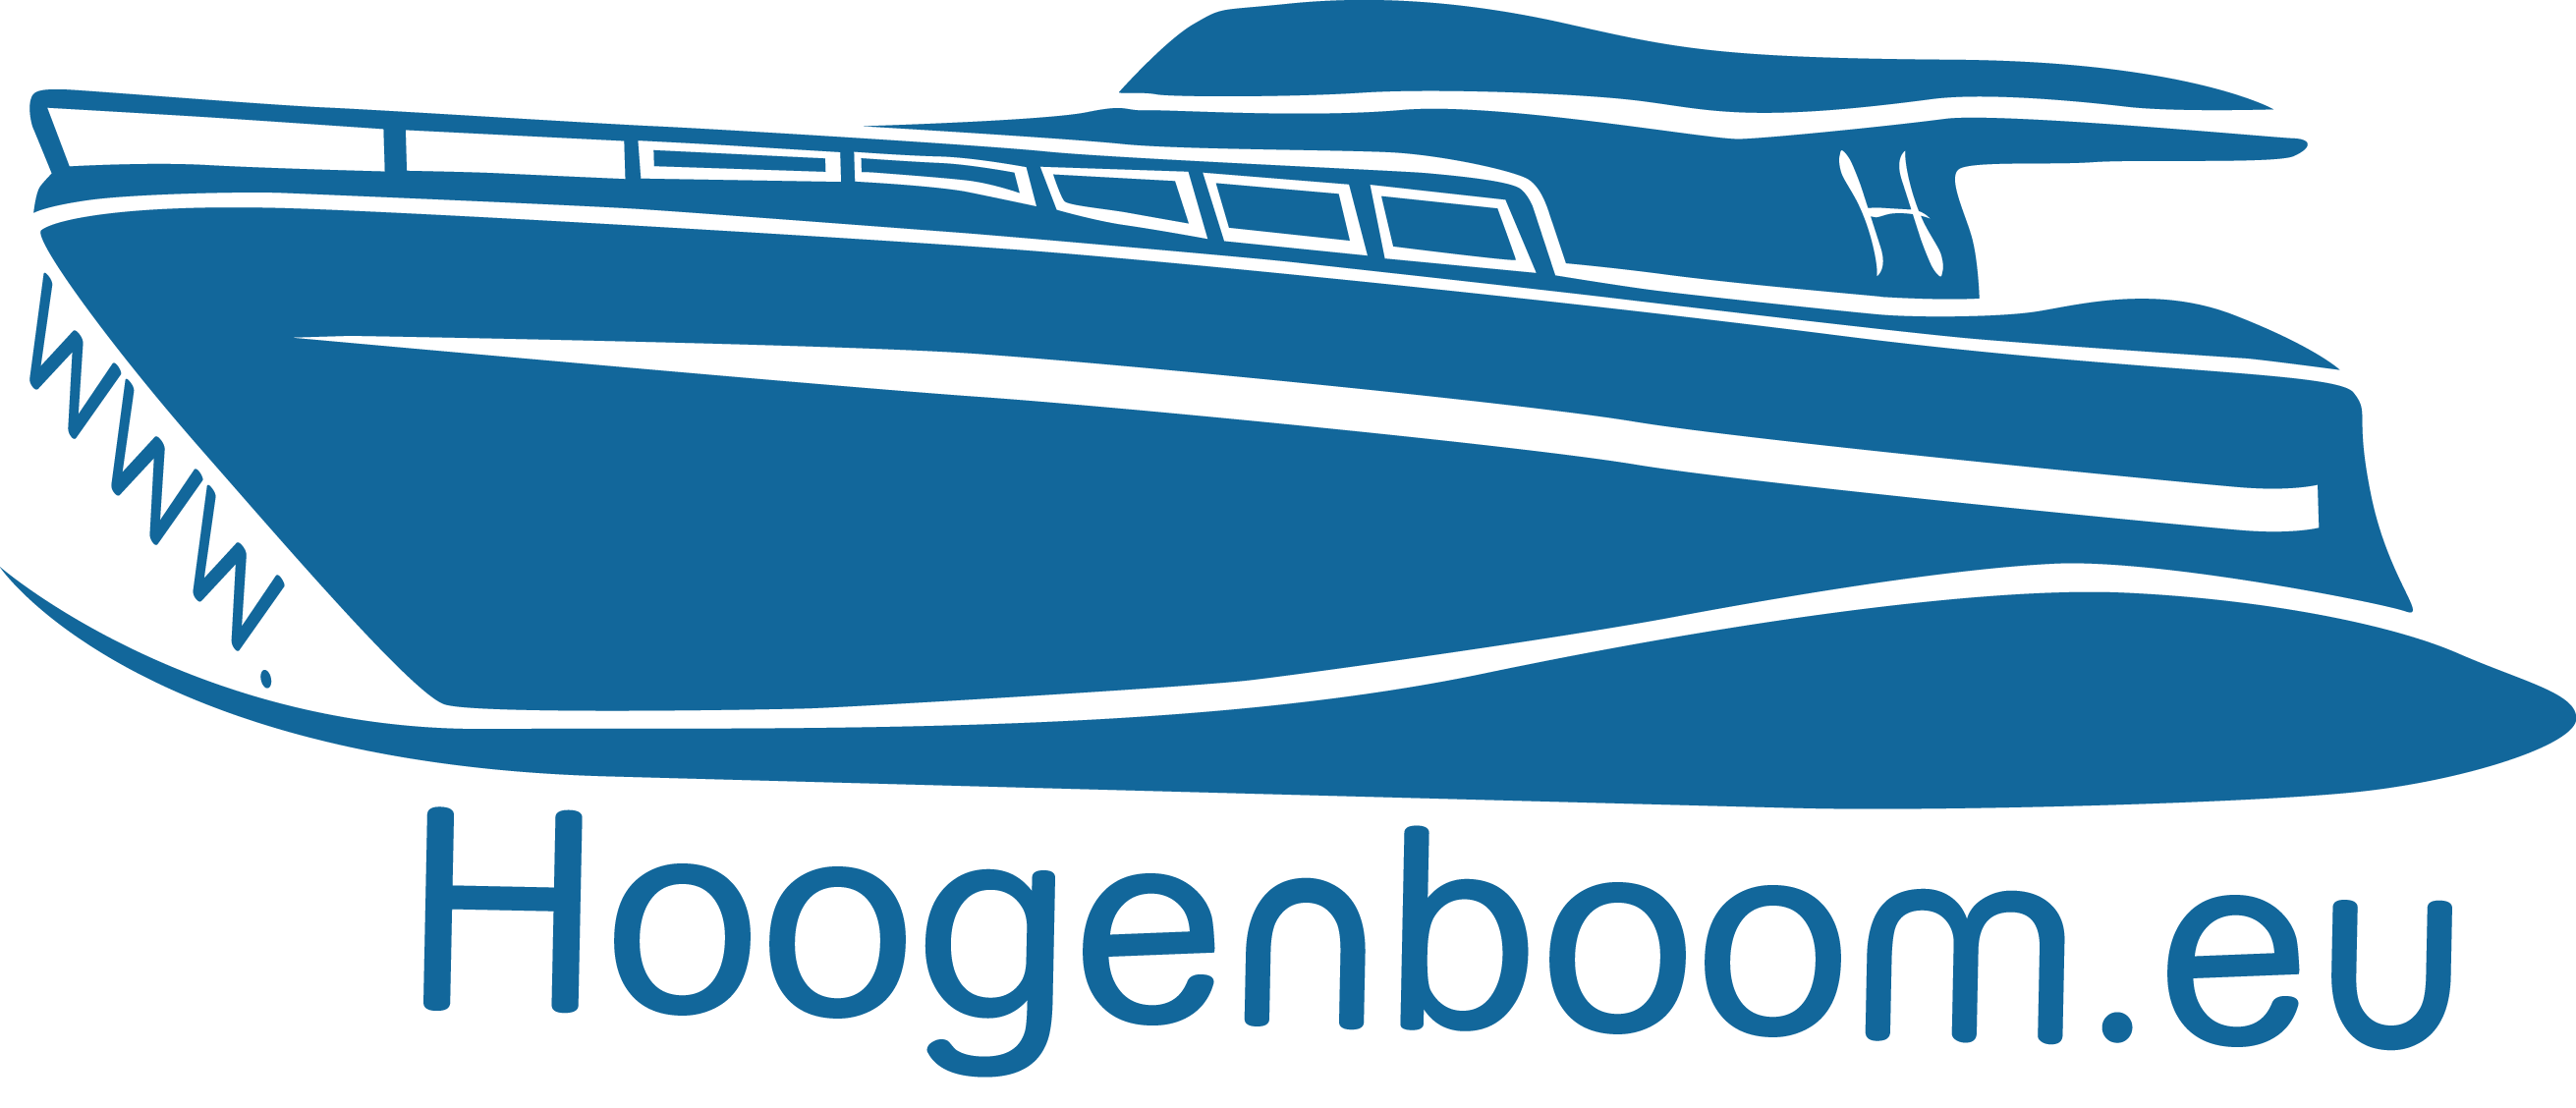 Hoogenboom.eu Alde Feanen Boating